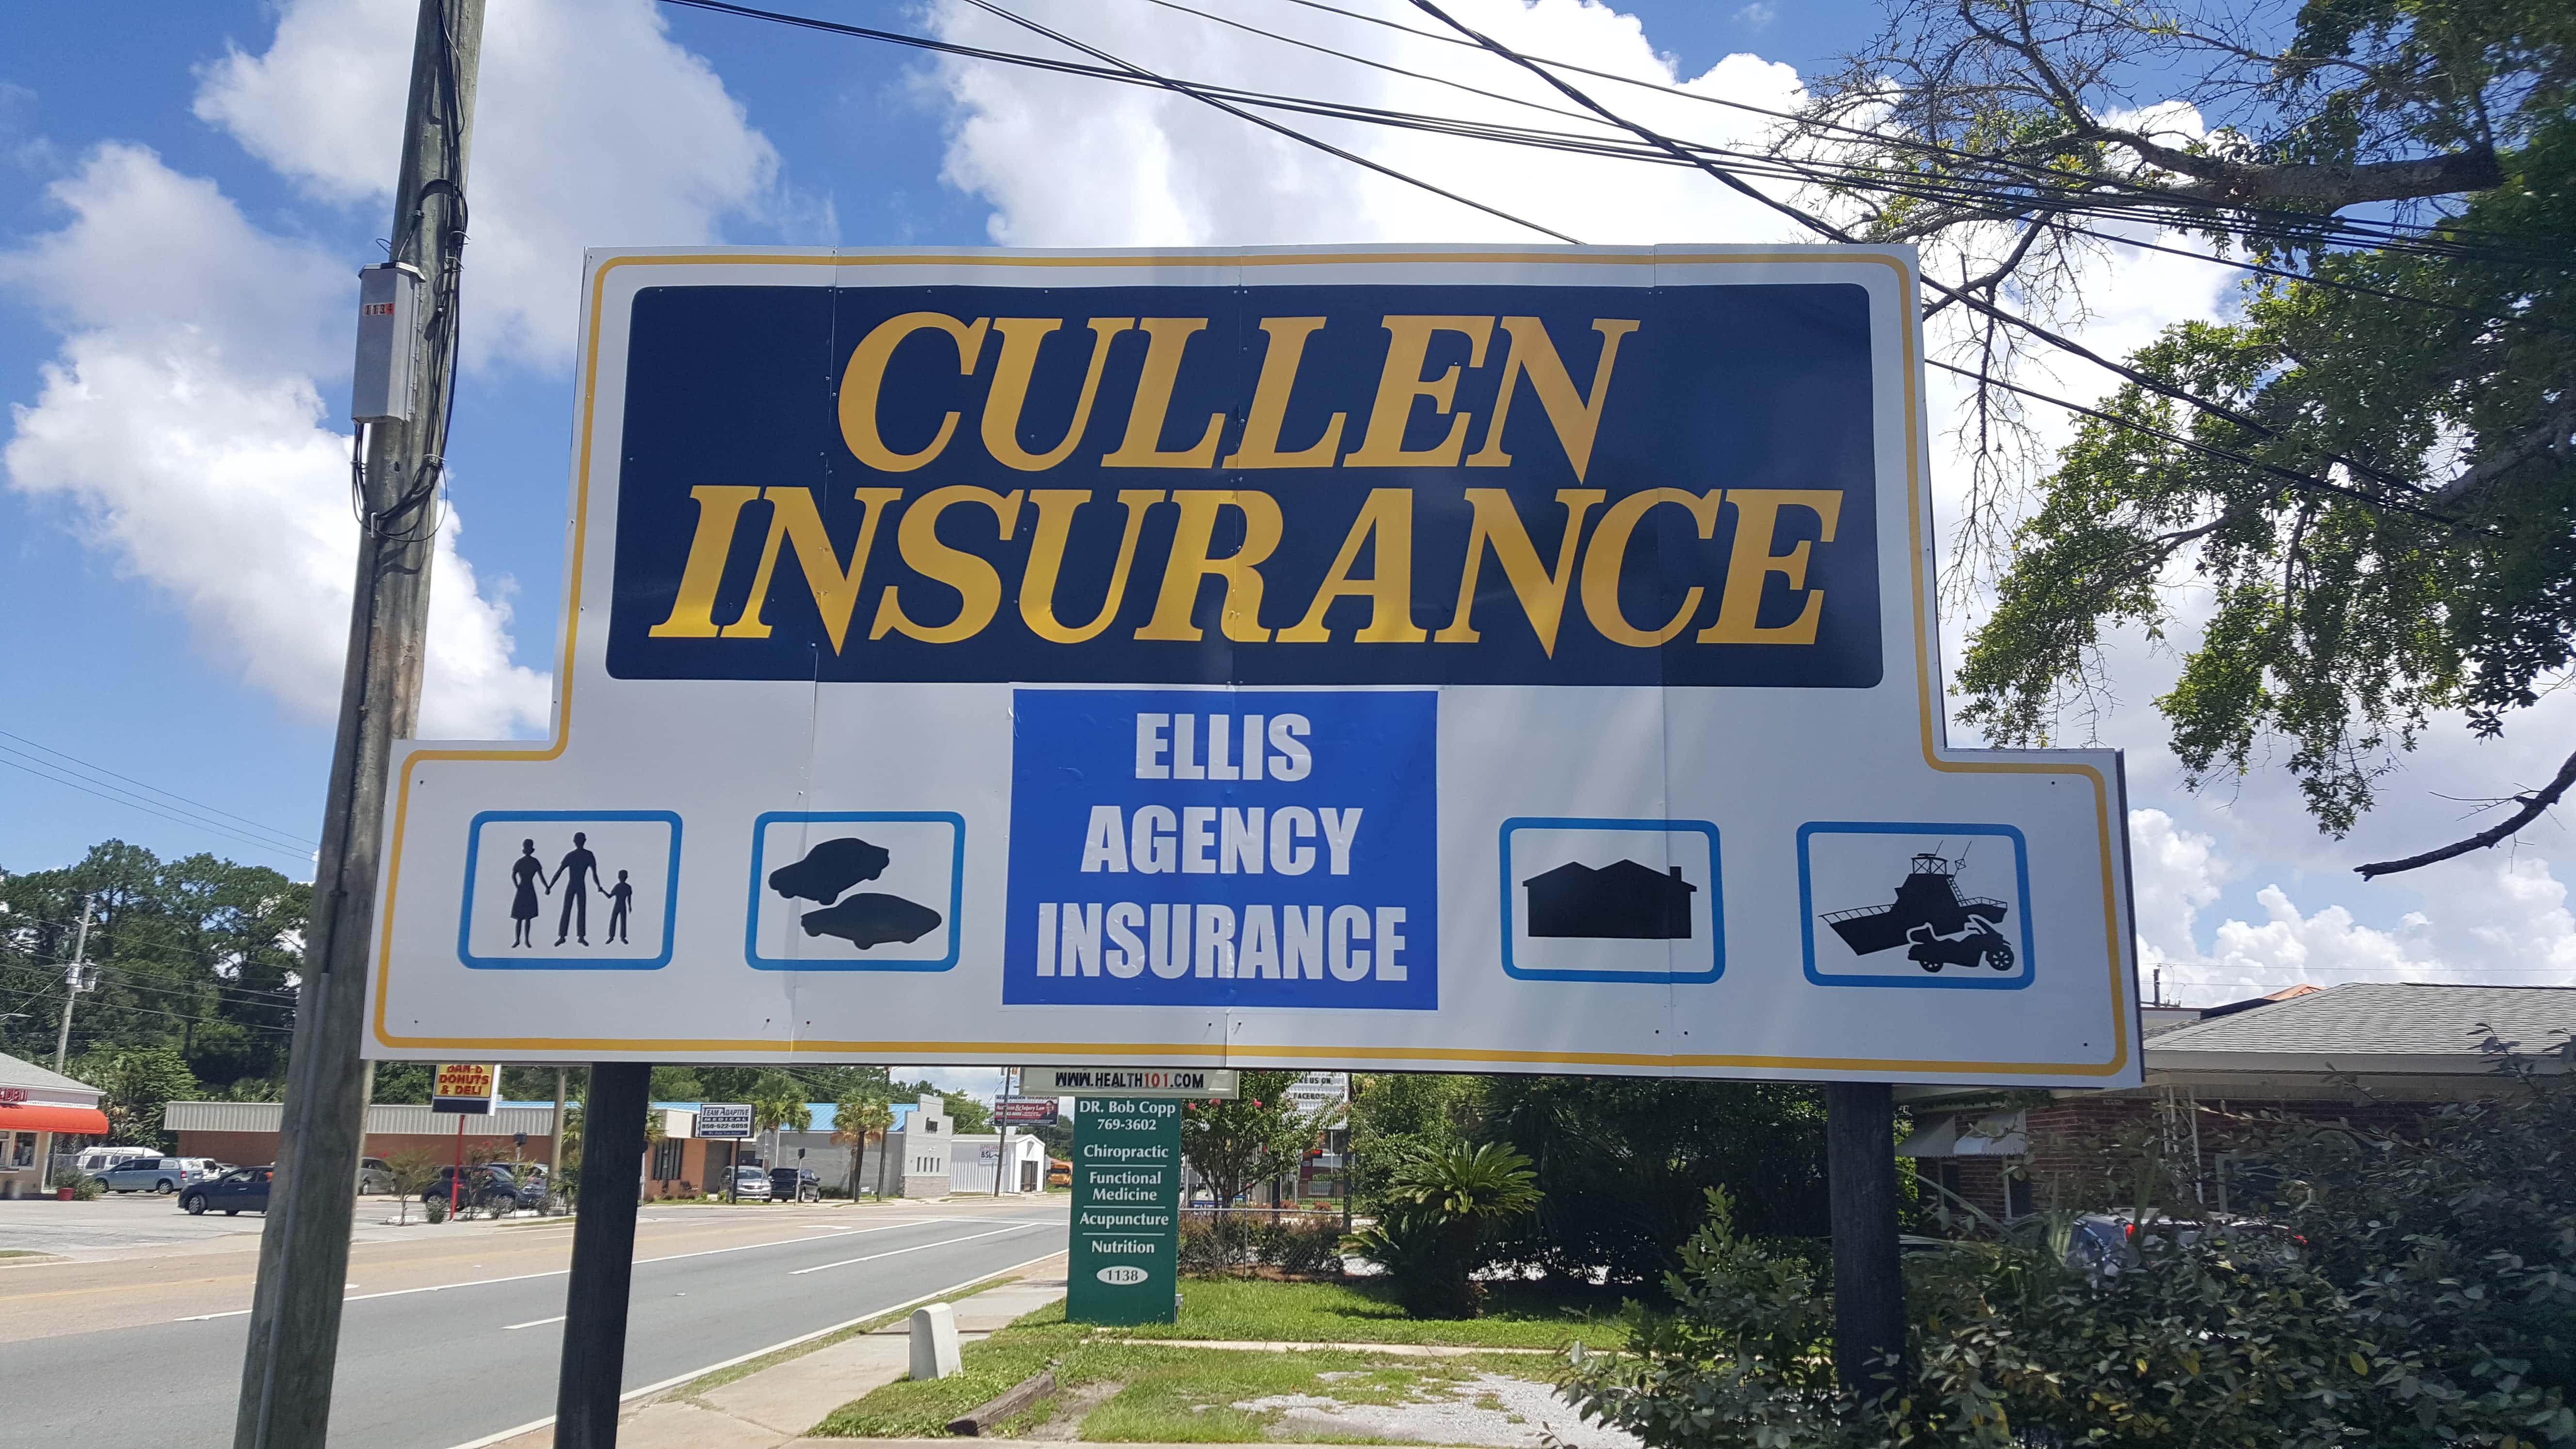 Ellis Agency Insurance - Panama City, FL, US, car ins
